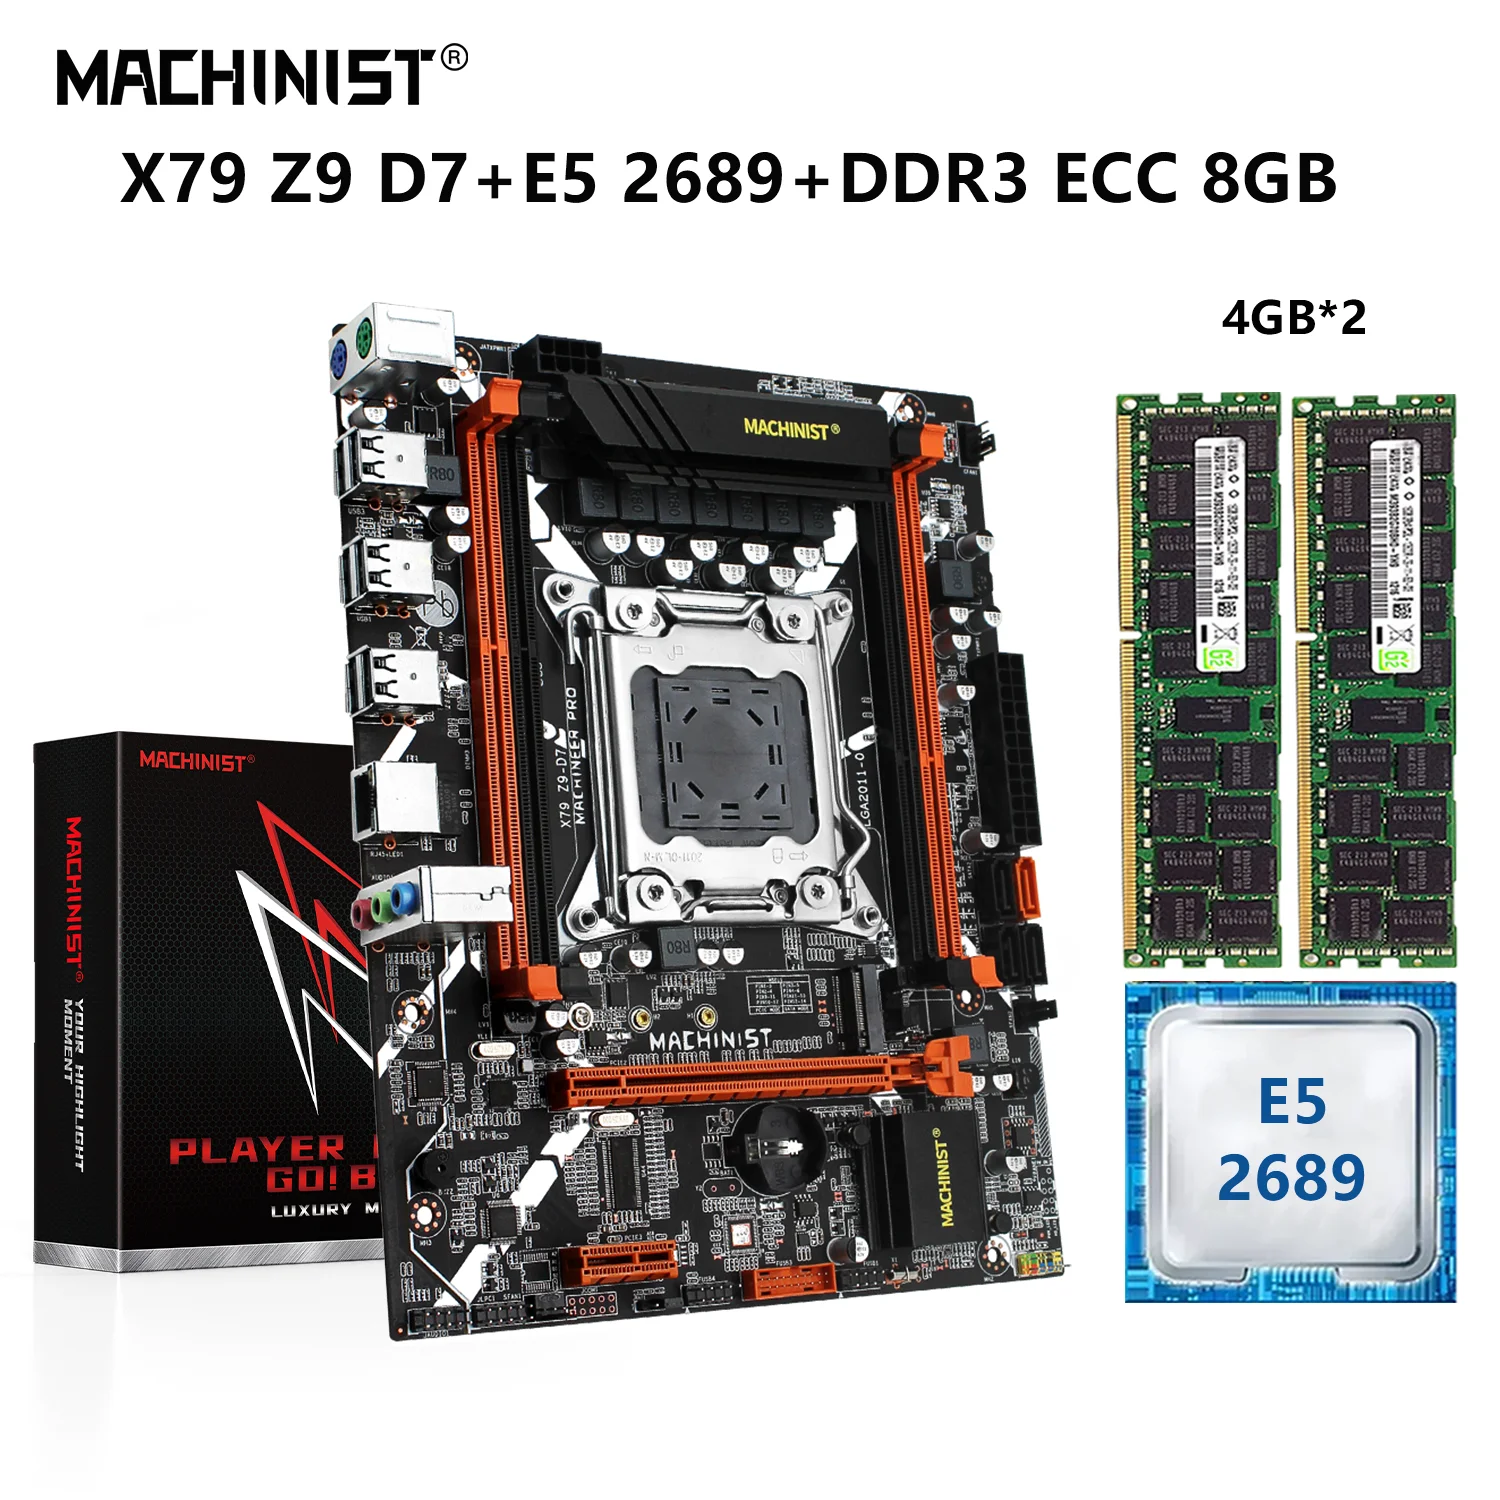 

MACHINIST X79 Motherboard LGA 2011 With Xeon E5 2689 CPU Processor 8G=4G*2 DDR3 ECC Memory Kit Set NVME M.2 SATA 3.0 X79-Z9-D7